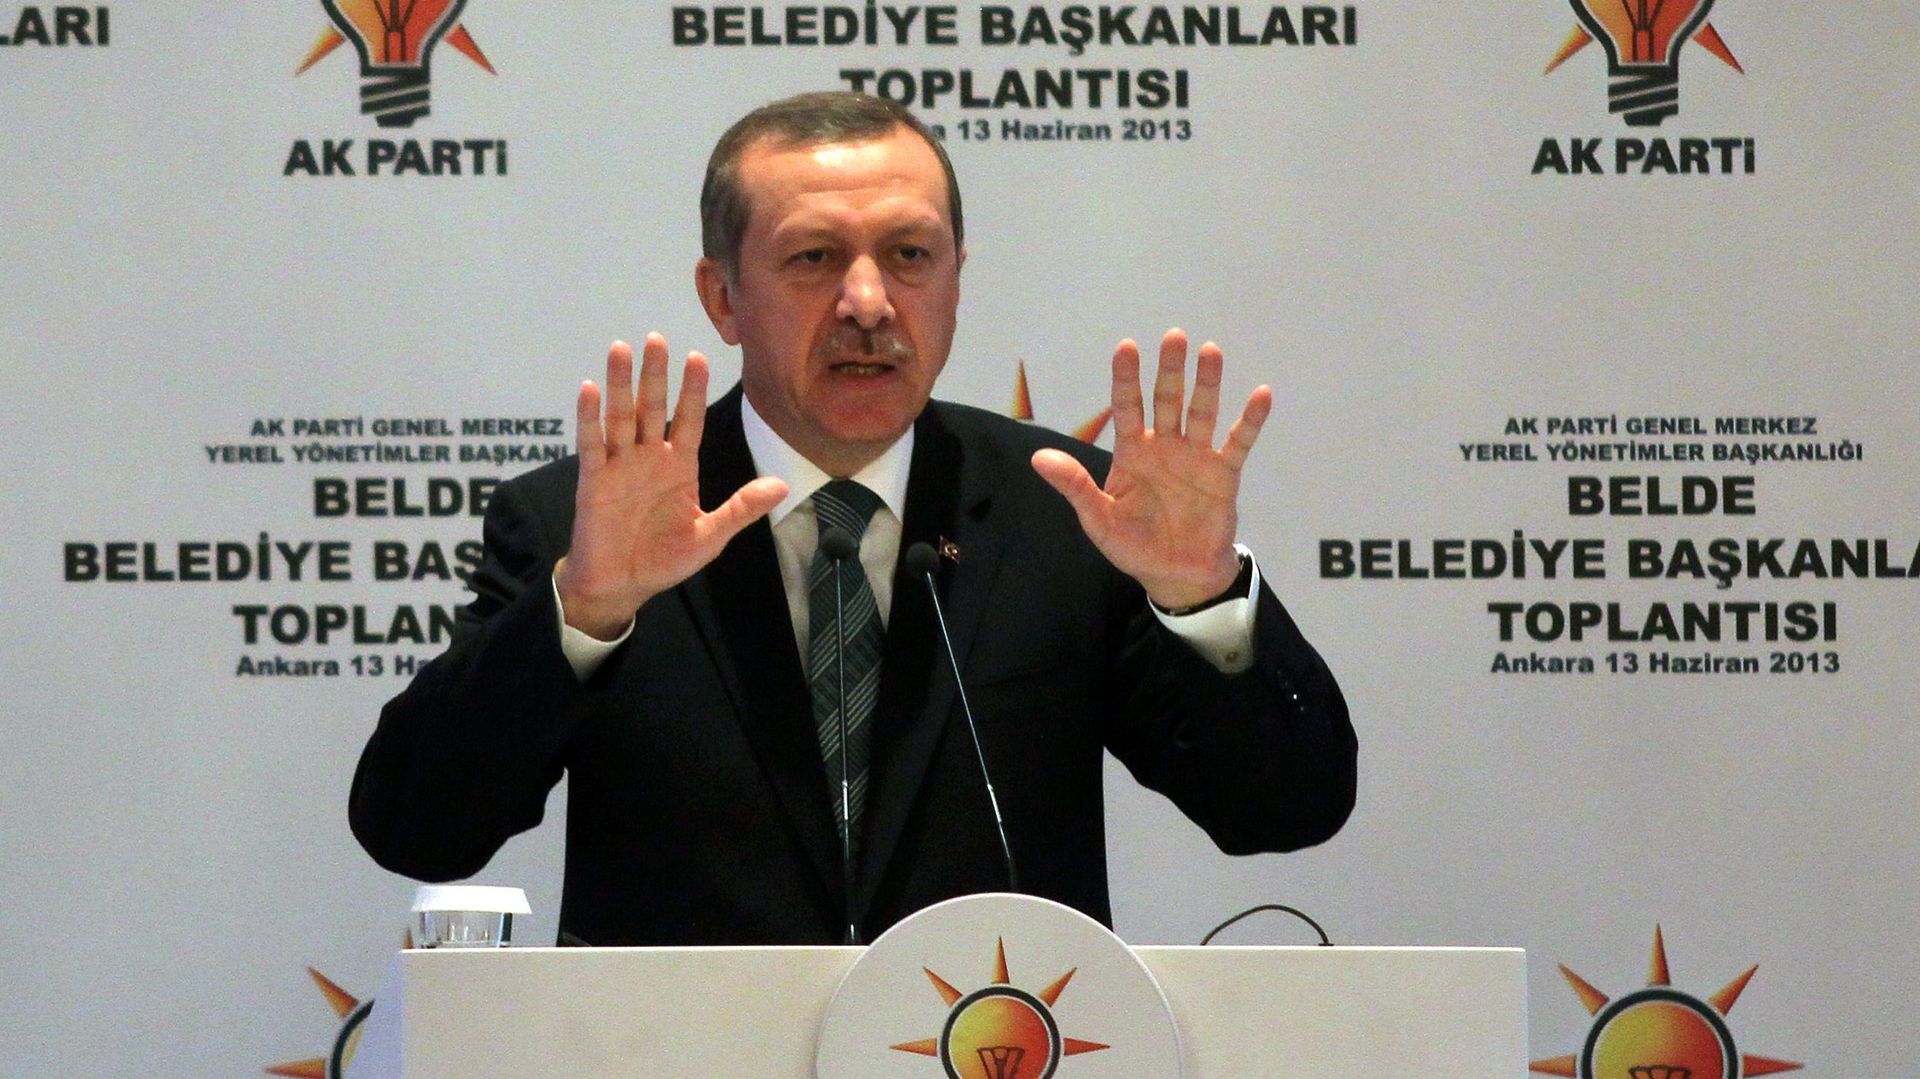 Tayyip Recep Erdogan harangue ses militants et menace les contestataires